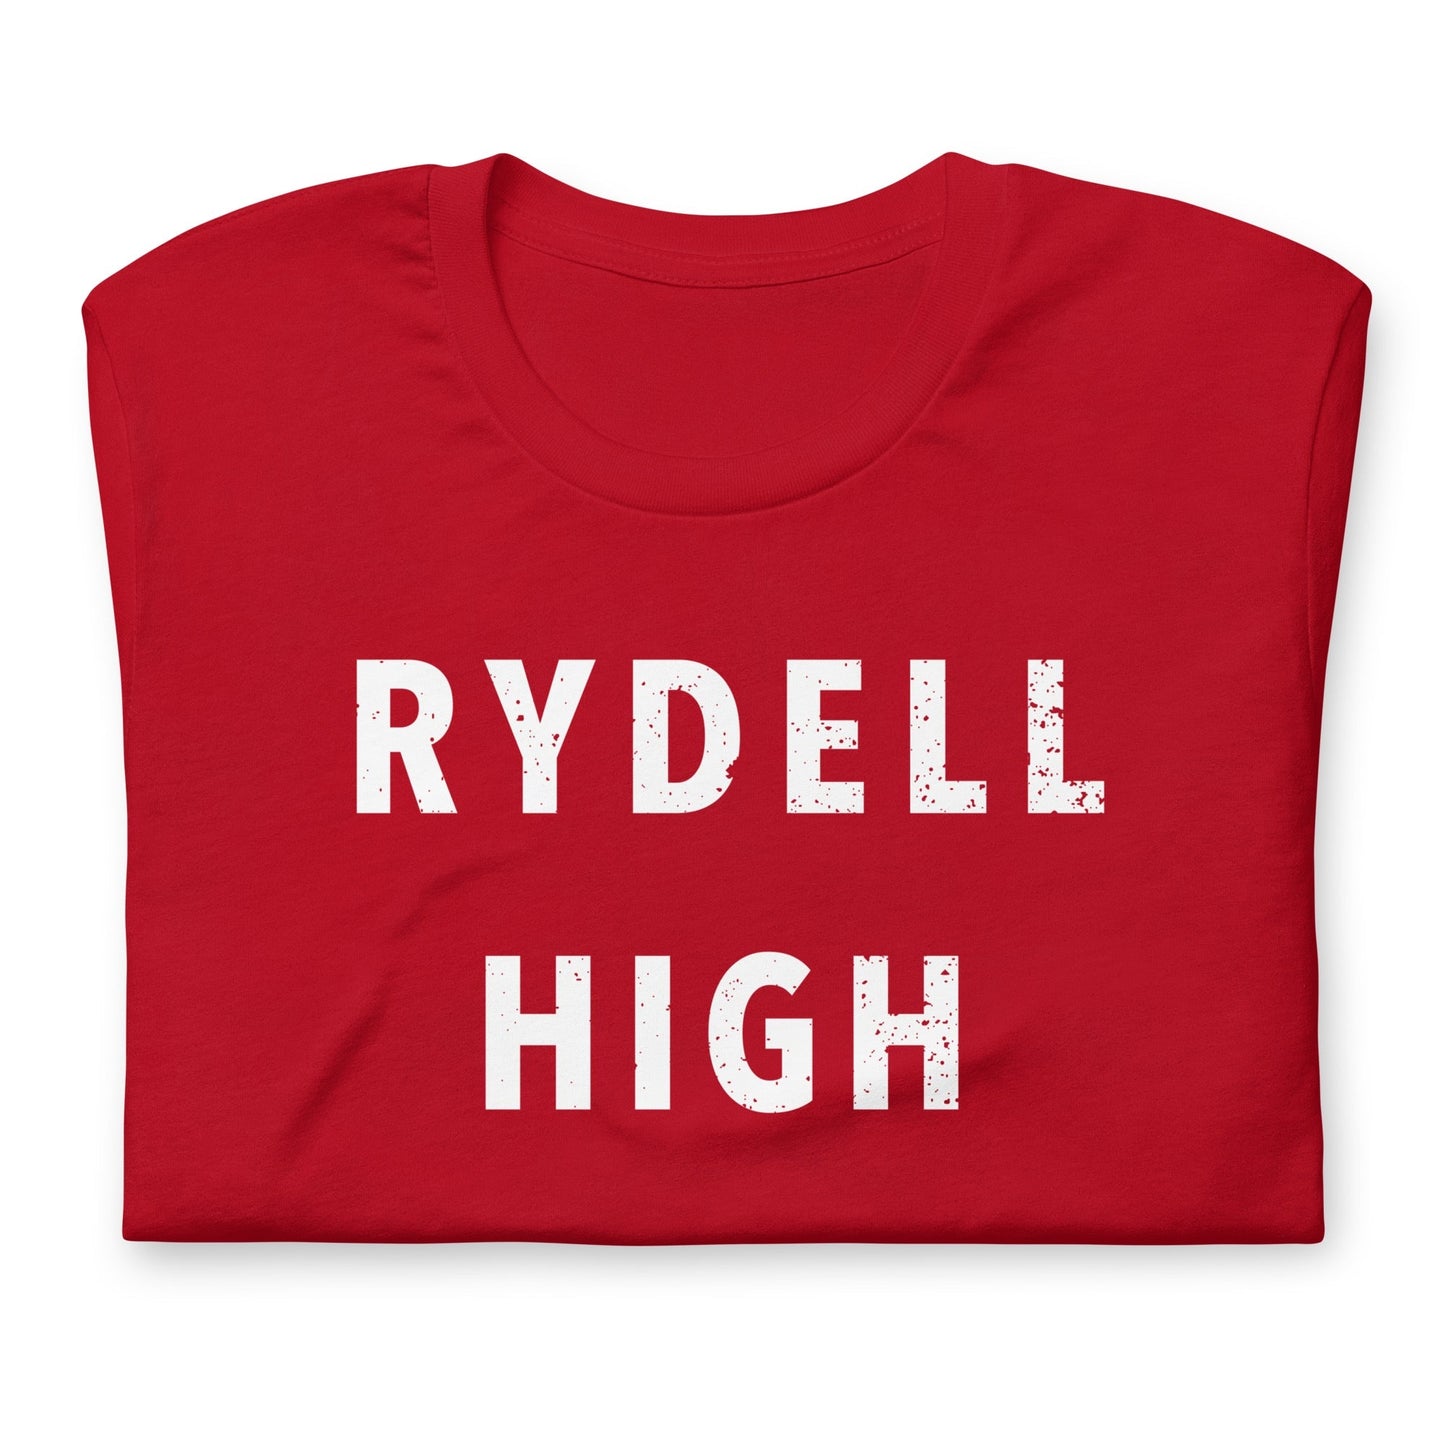 Grease Rydell High School Adult Short Sleeve T - Shirt - Paramount Shop